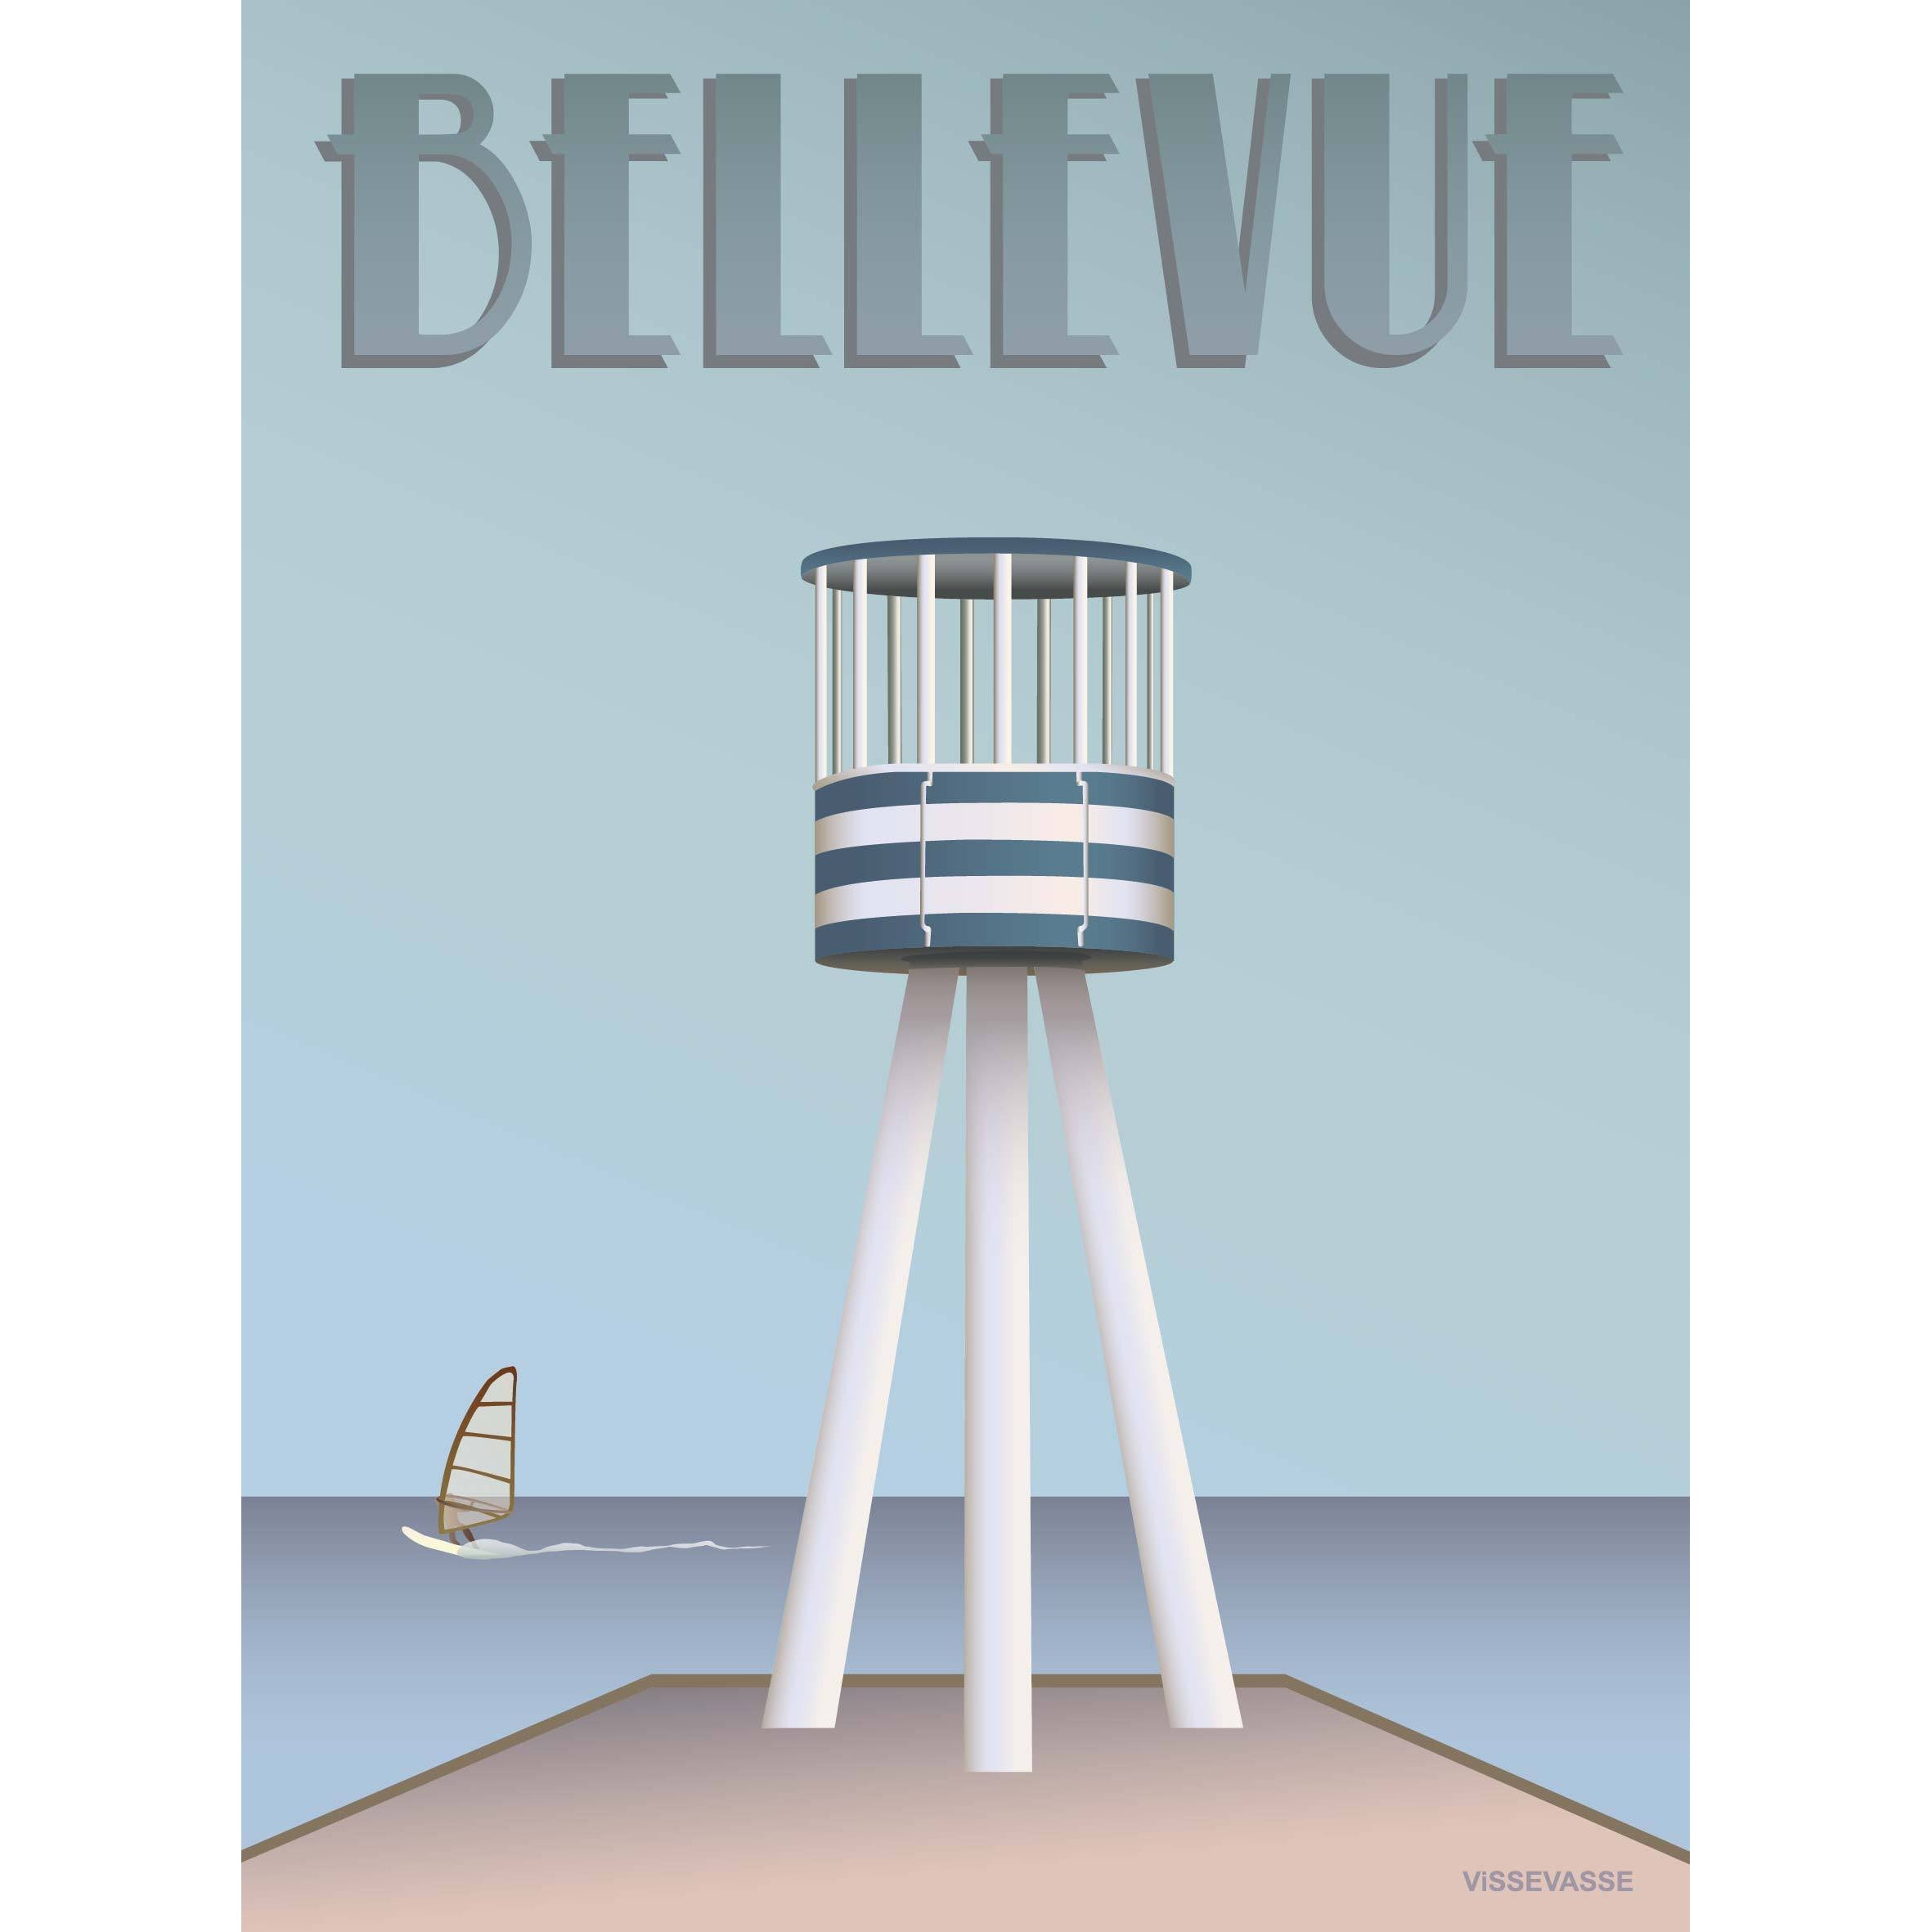 Vissevasse Bellevue Hiforguard Tower Partter, 15 x21 cm